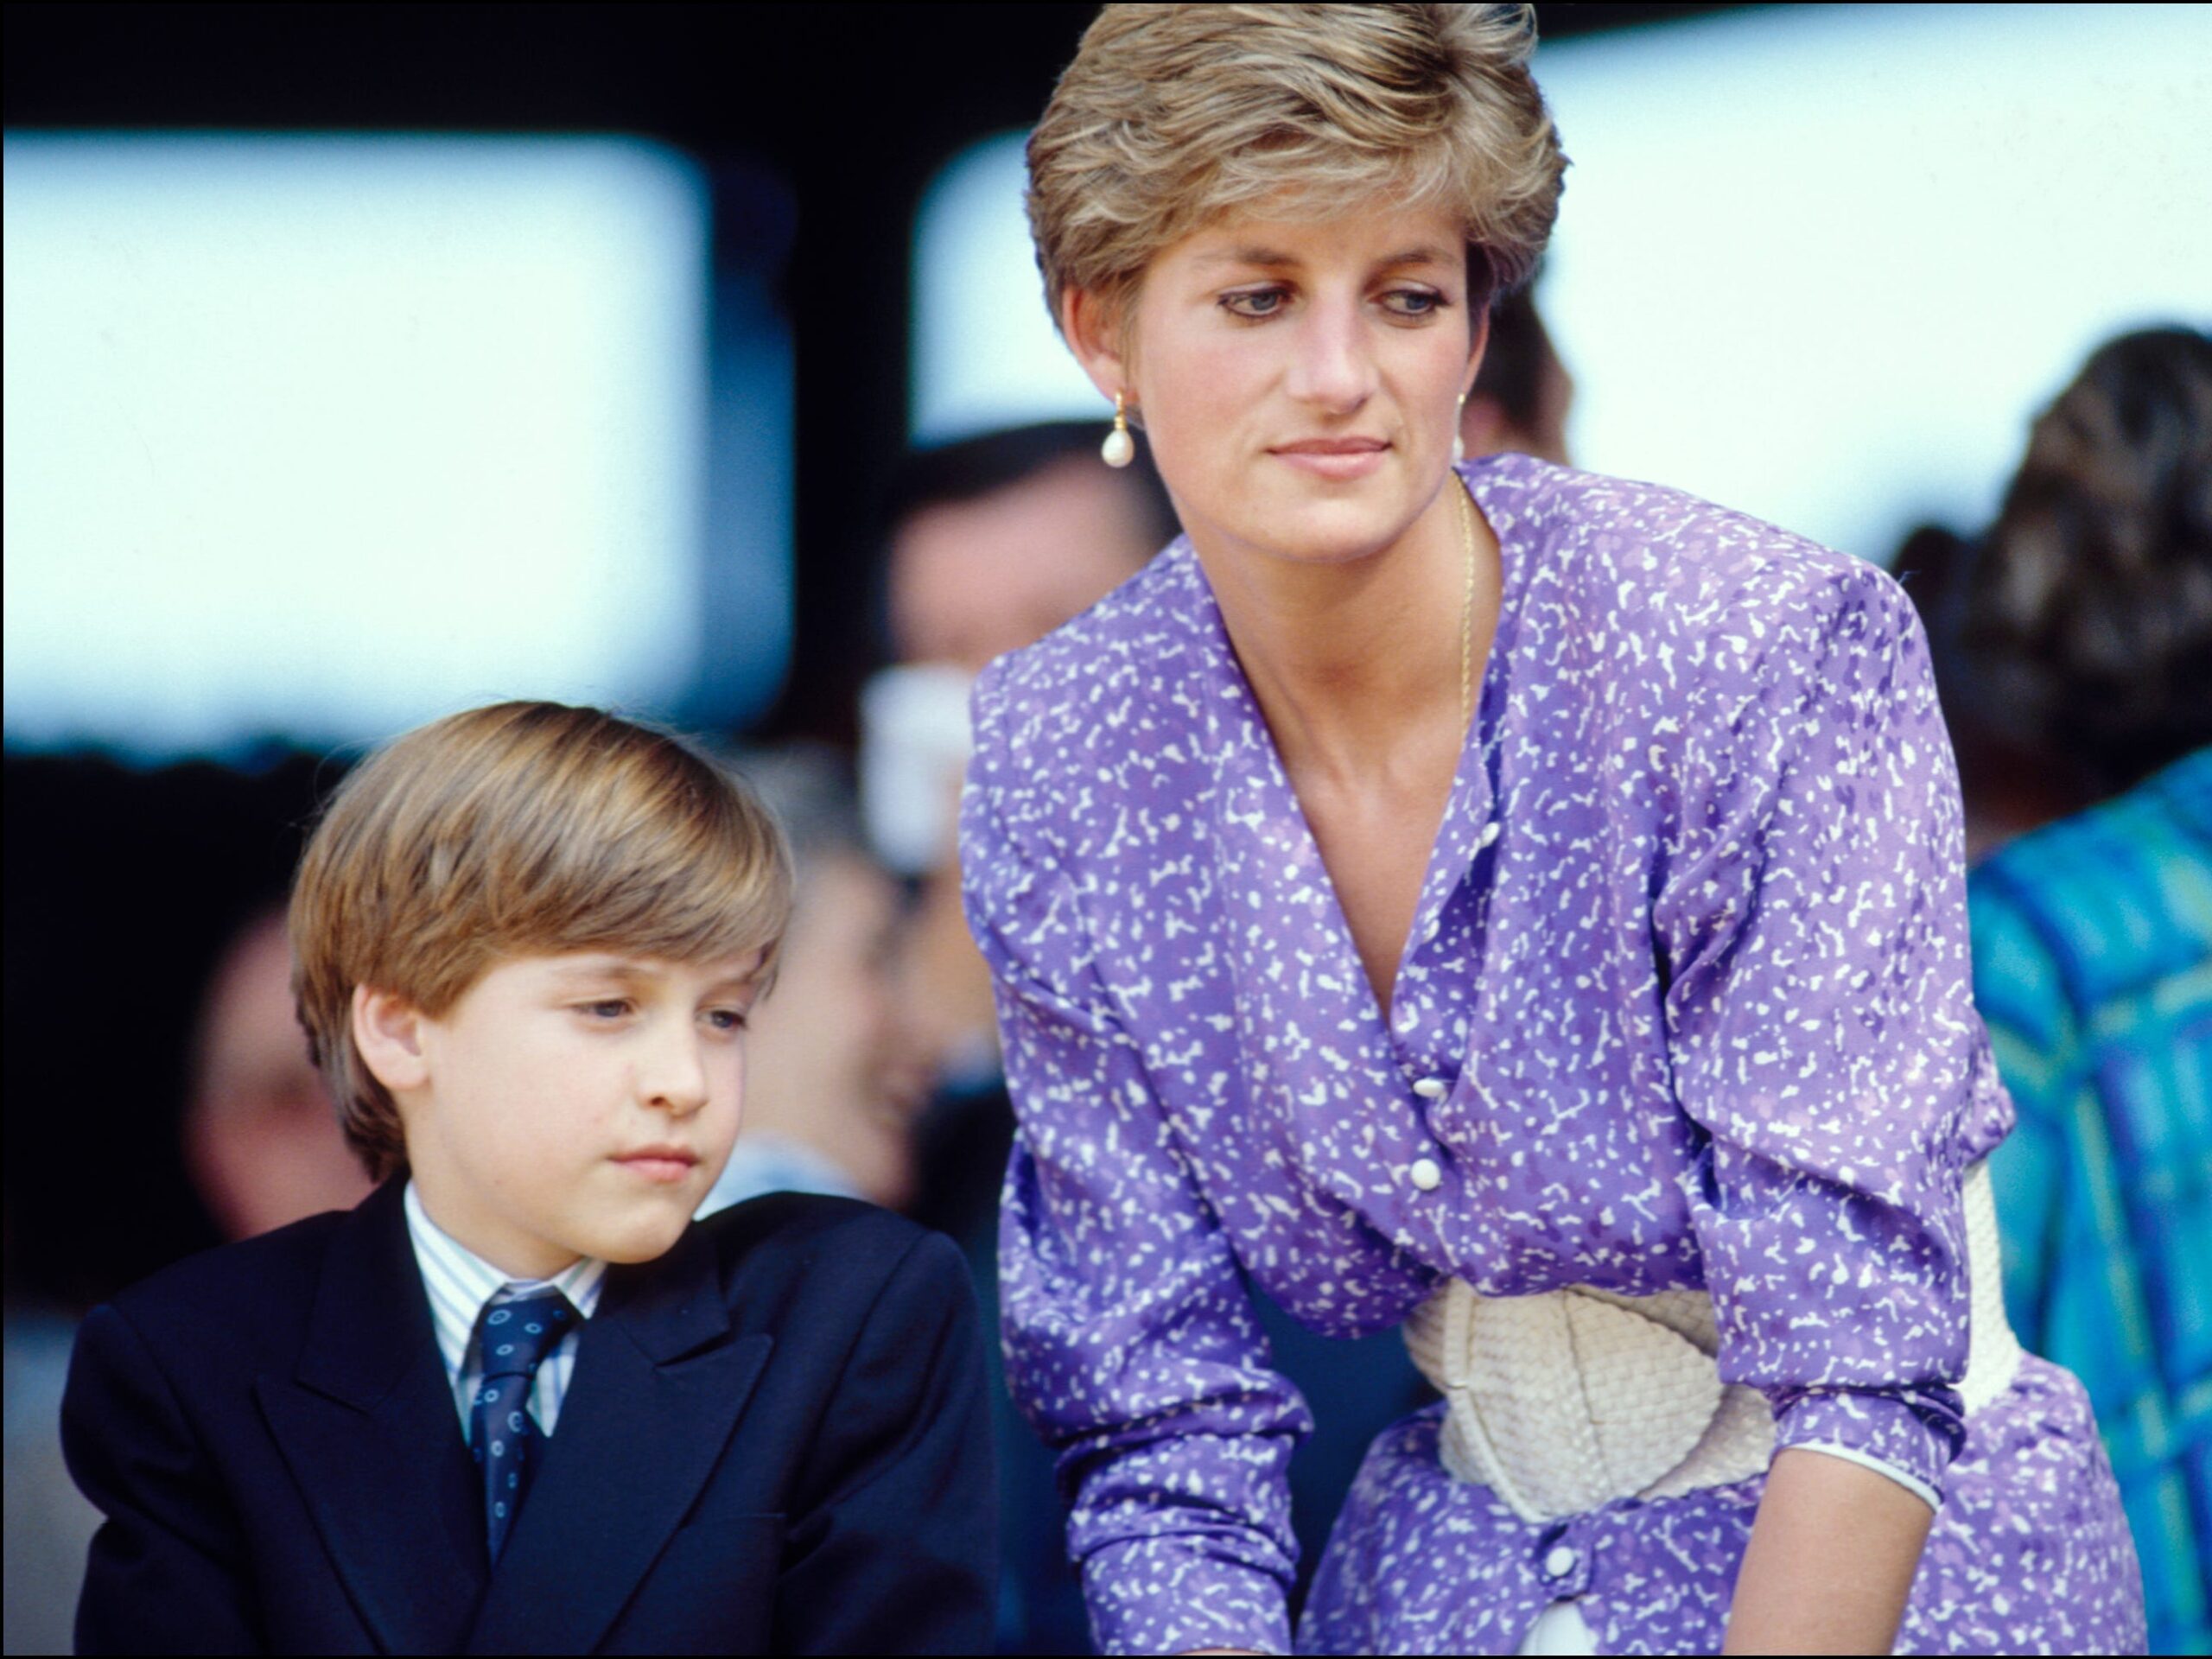 Princess Diana and Prince William enjoying a Wimbledon Championship tennis match in 1991.